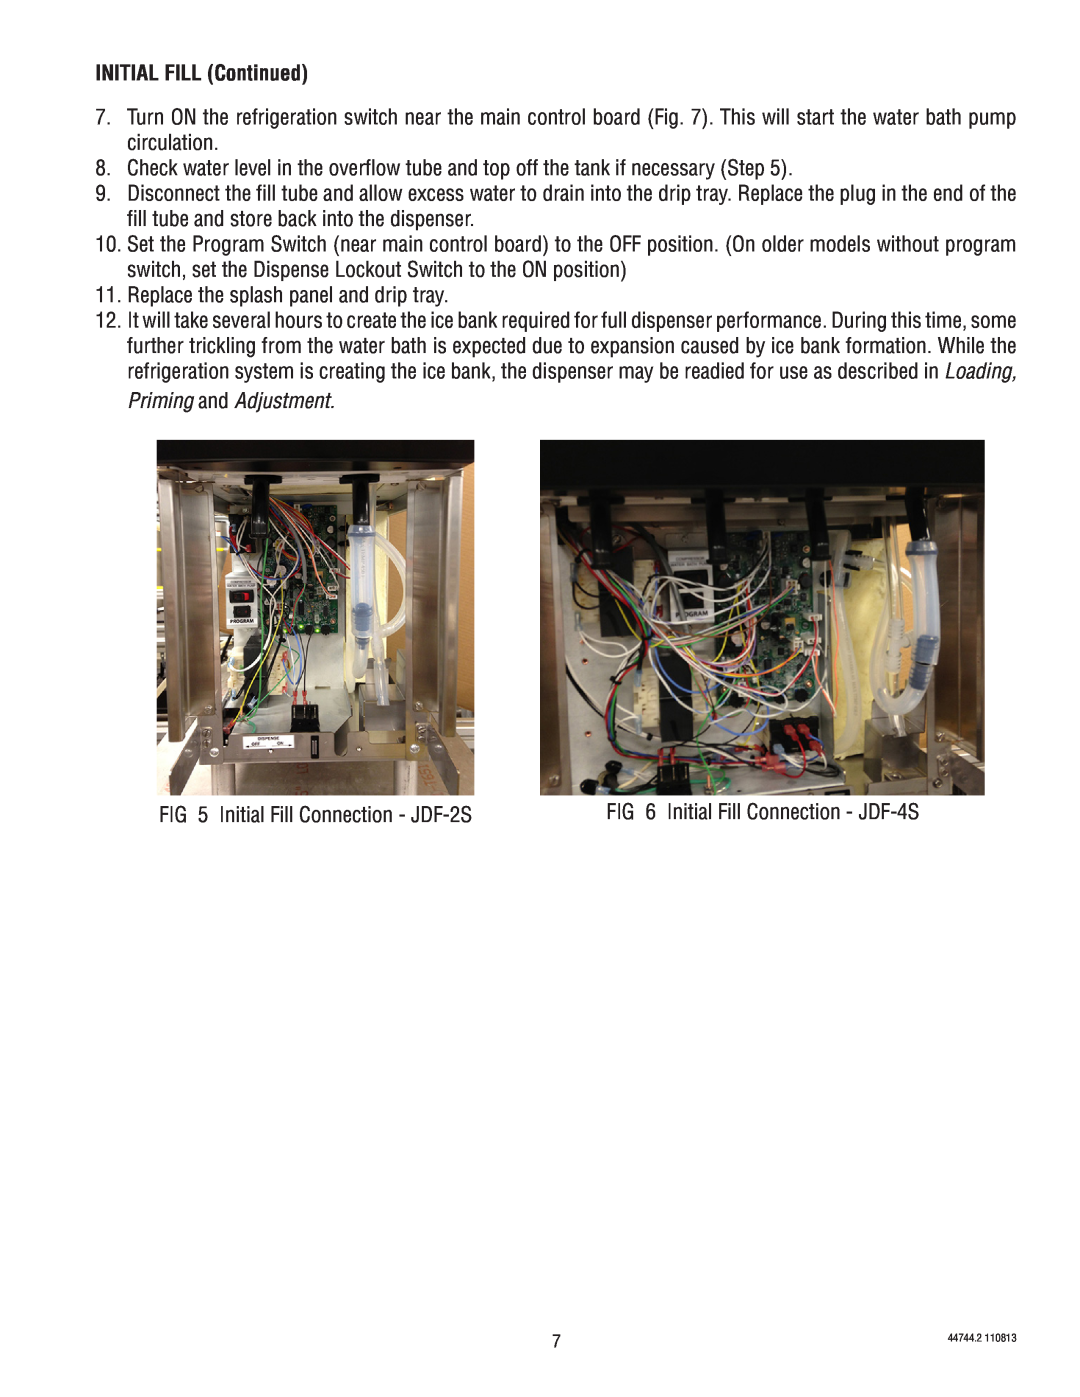 Bunn JDF-4S service manual INITIAL FILL Continued 